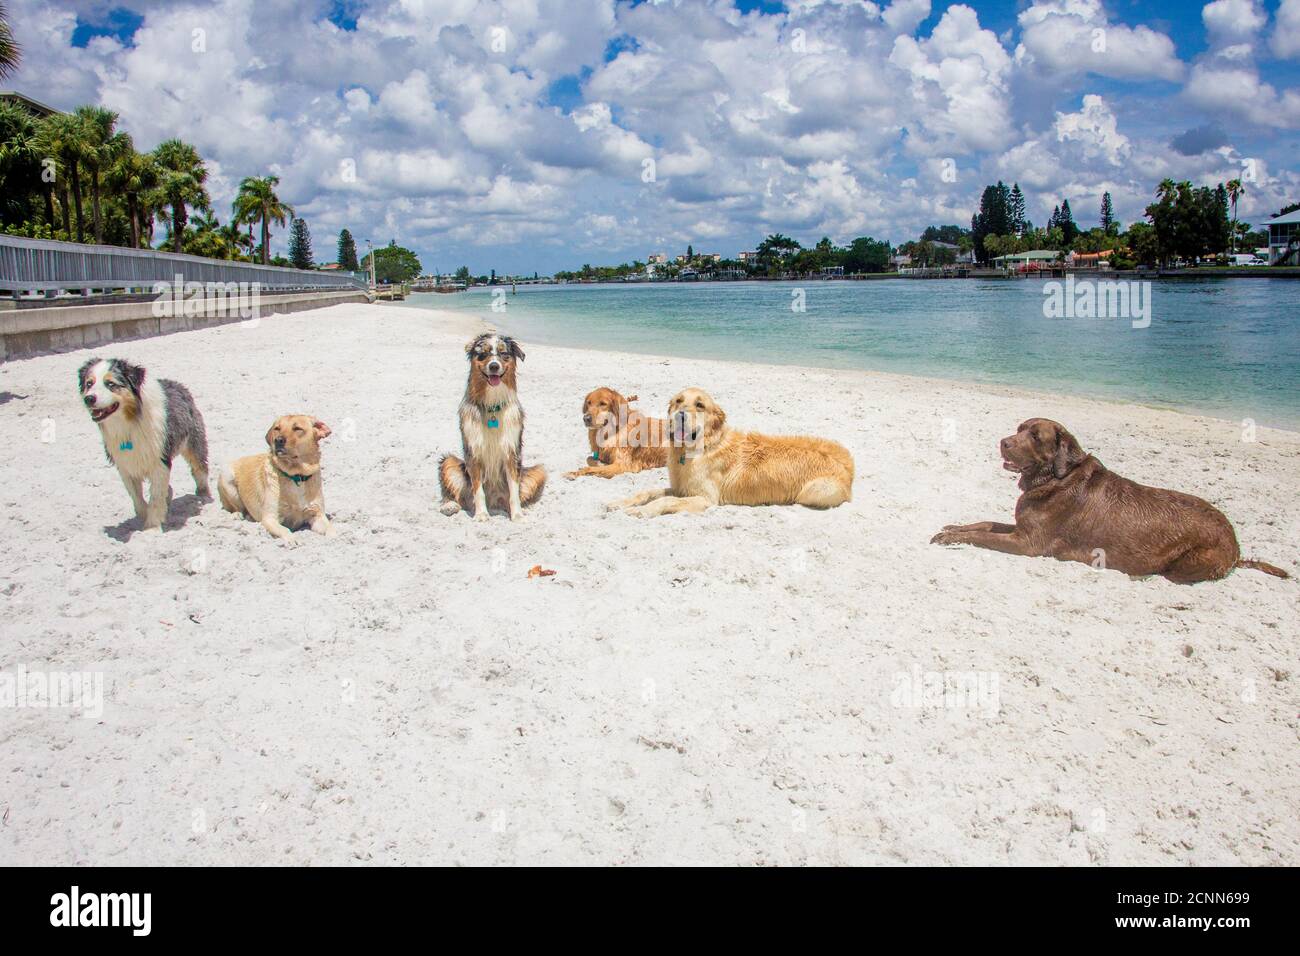 Six dogs sitting on beach, Florida, USA Stock Photo